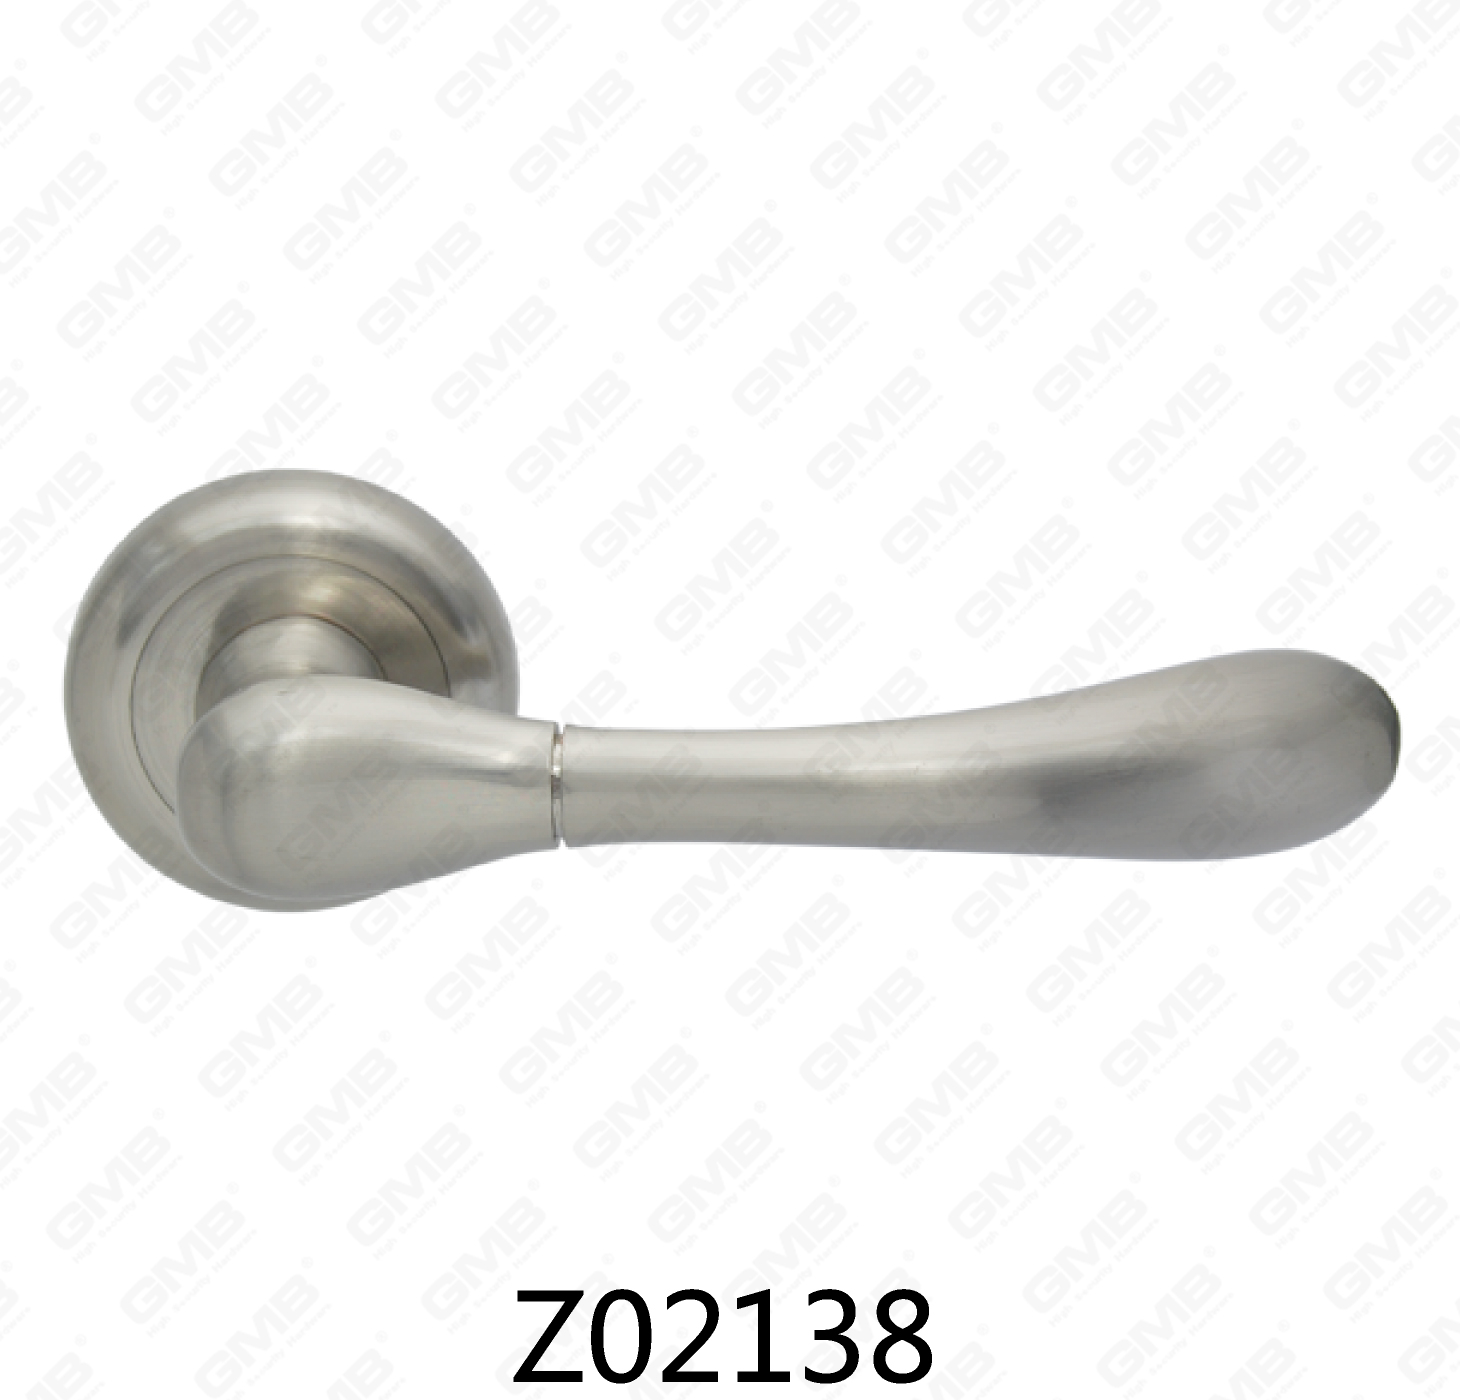 Manija de puerta de roseta de aluminio de aleación de zinc Zamak con roseta redonda (Z02138)